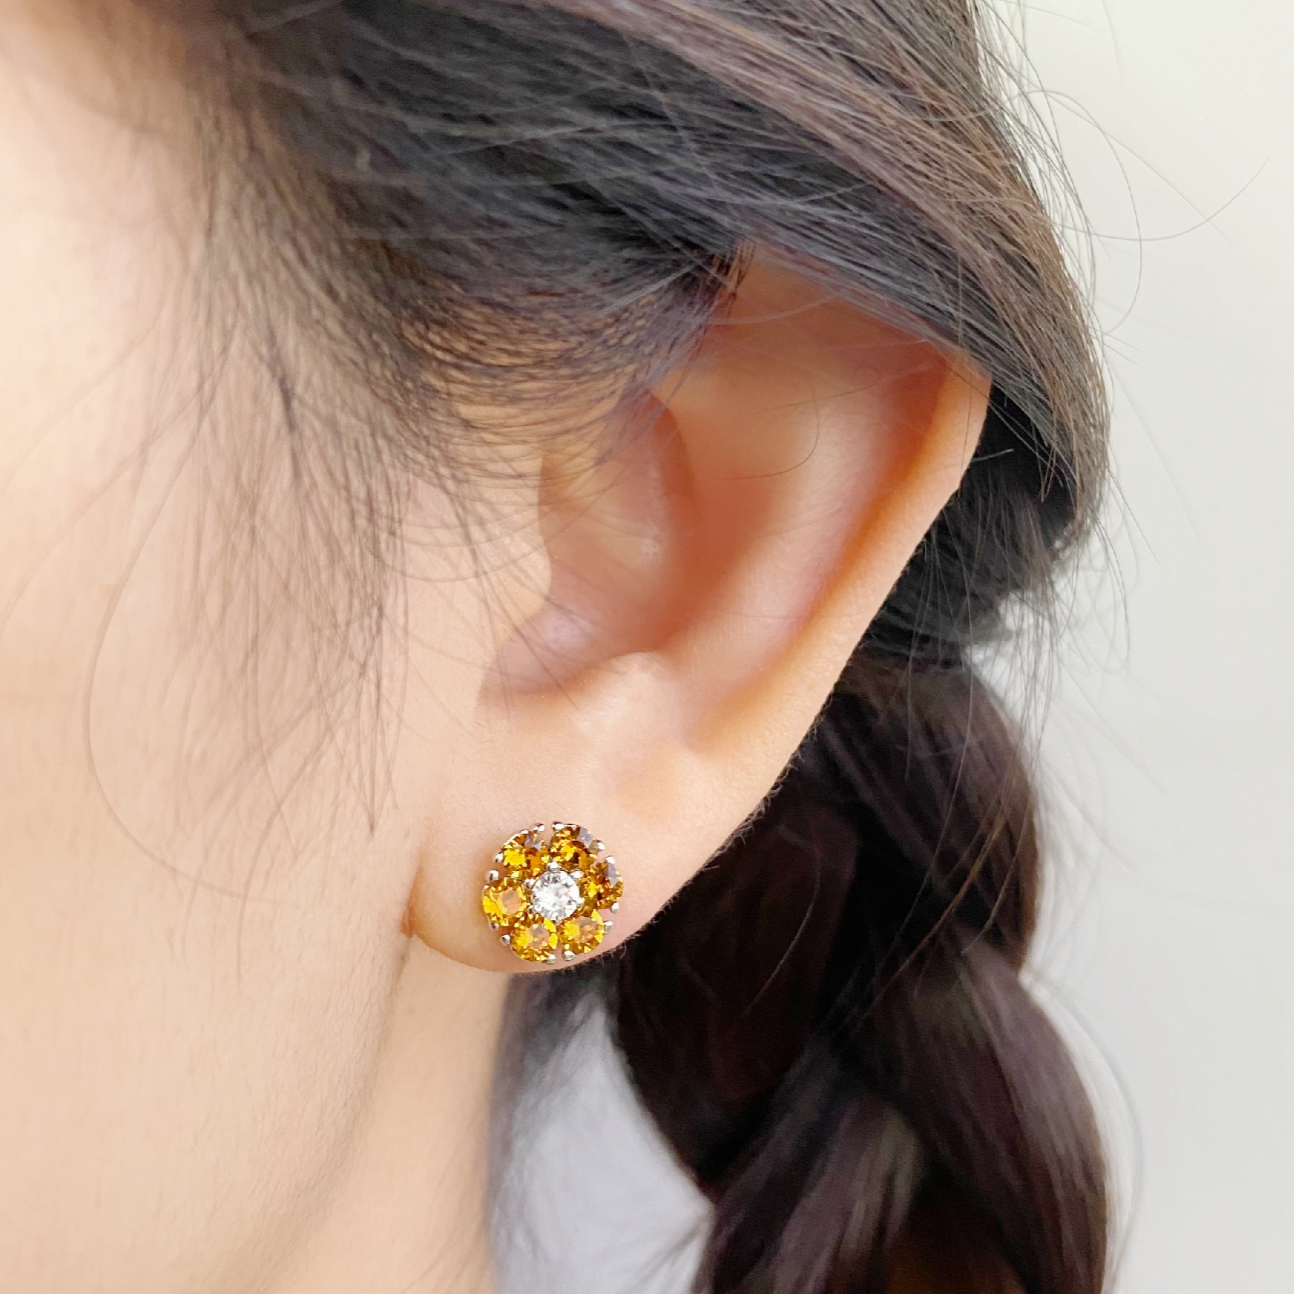 Flower Birthstone Earrings (Topaz, Pure Rhodium Plated) - Lush Addiction, Crystals from Swarovski